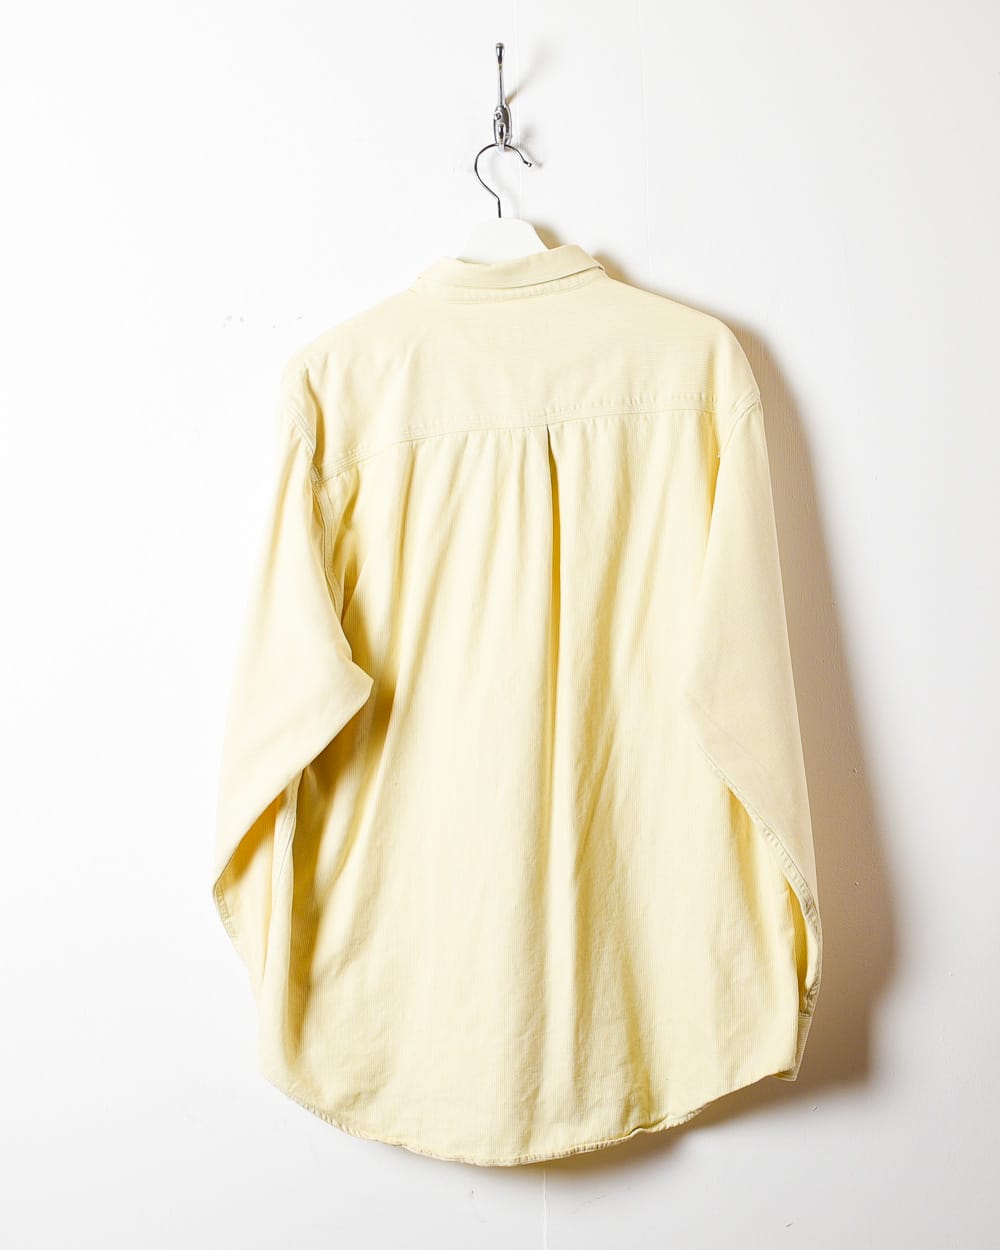 Neutral Timberland Shirt - X-Large